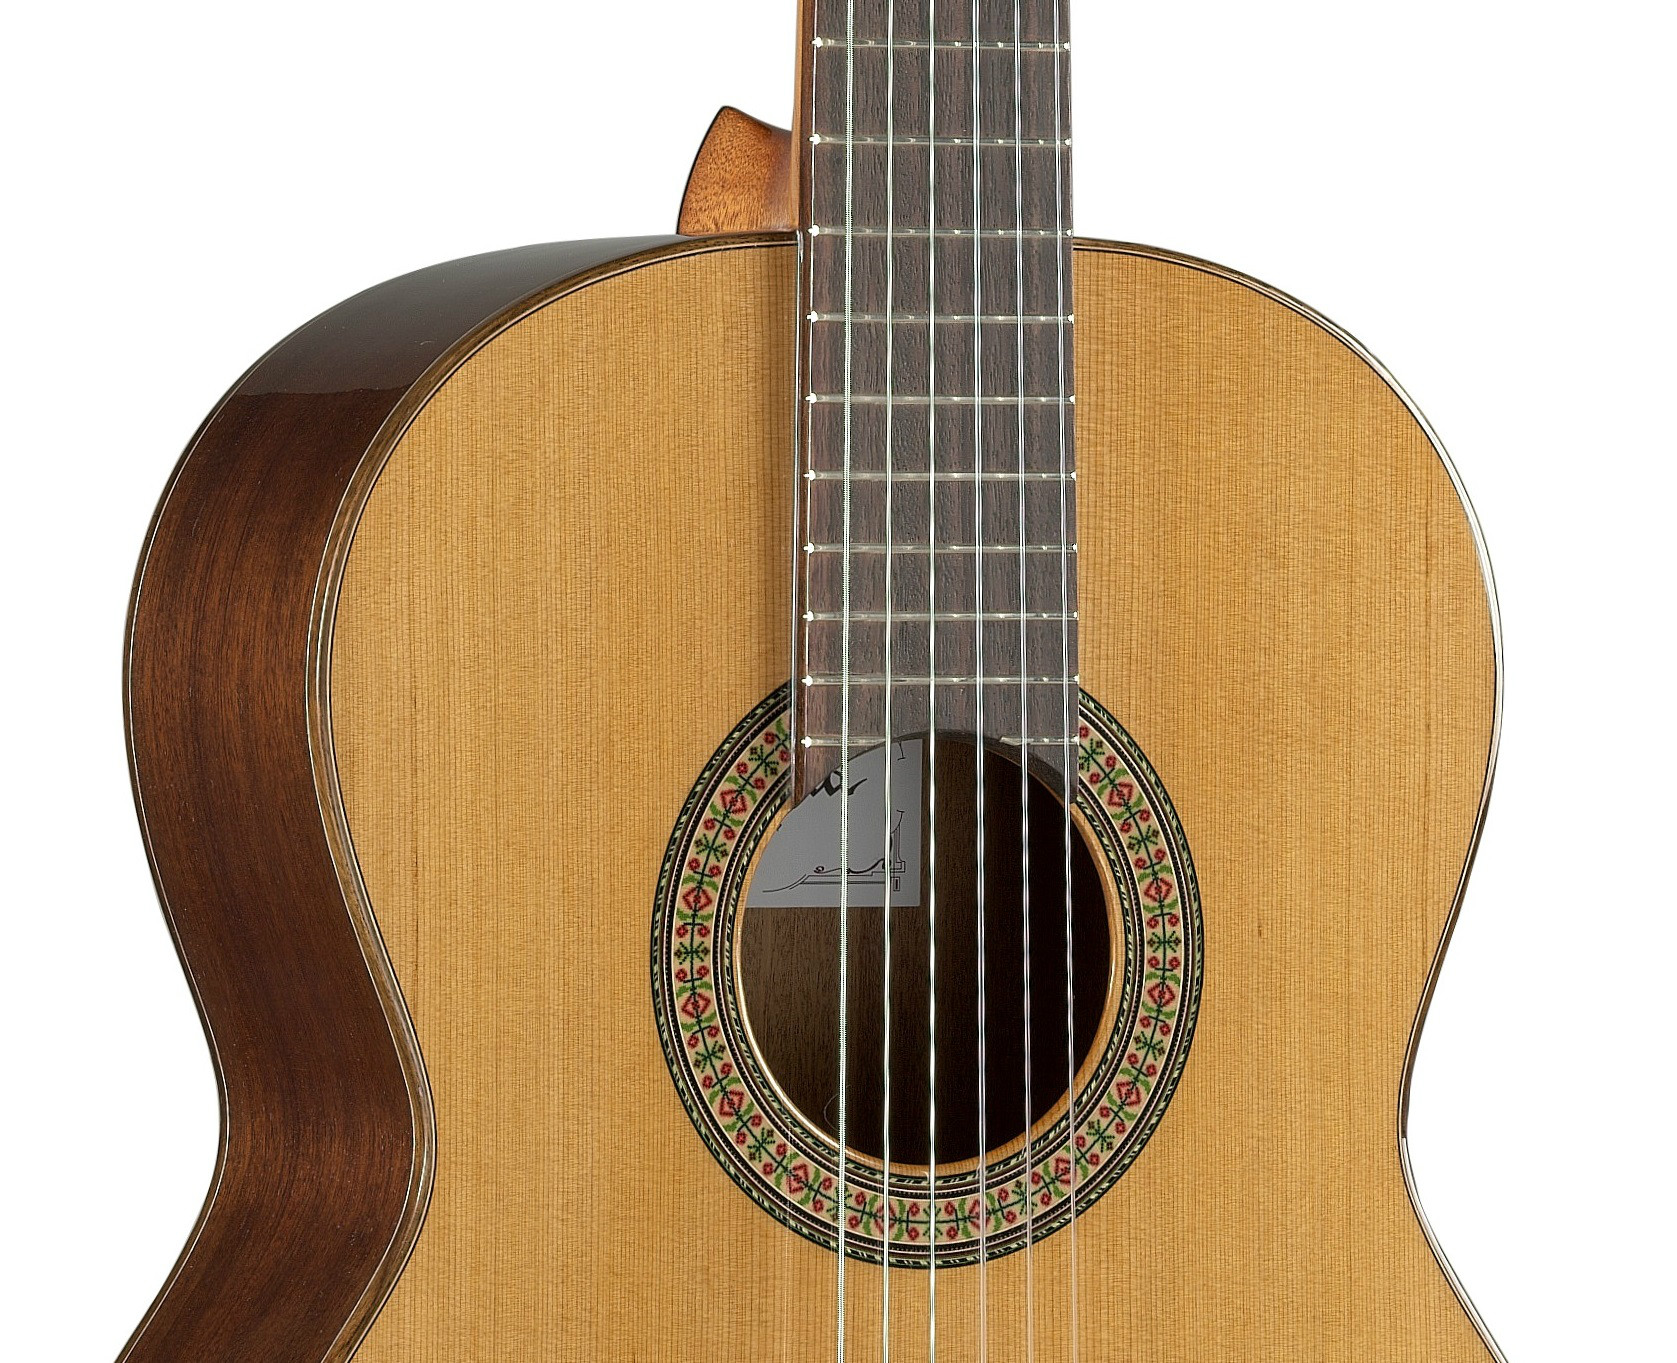 Alhambra 3c Cedre Sapele Rw - Natural - Classical guitar 4/4 size - Variation 2